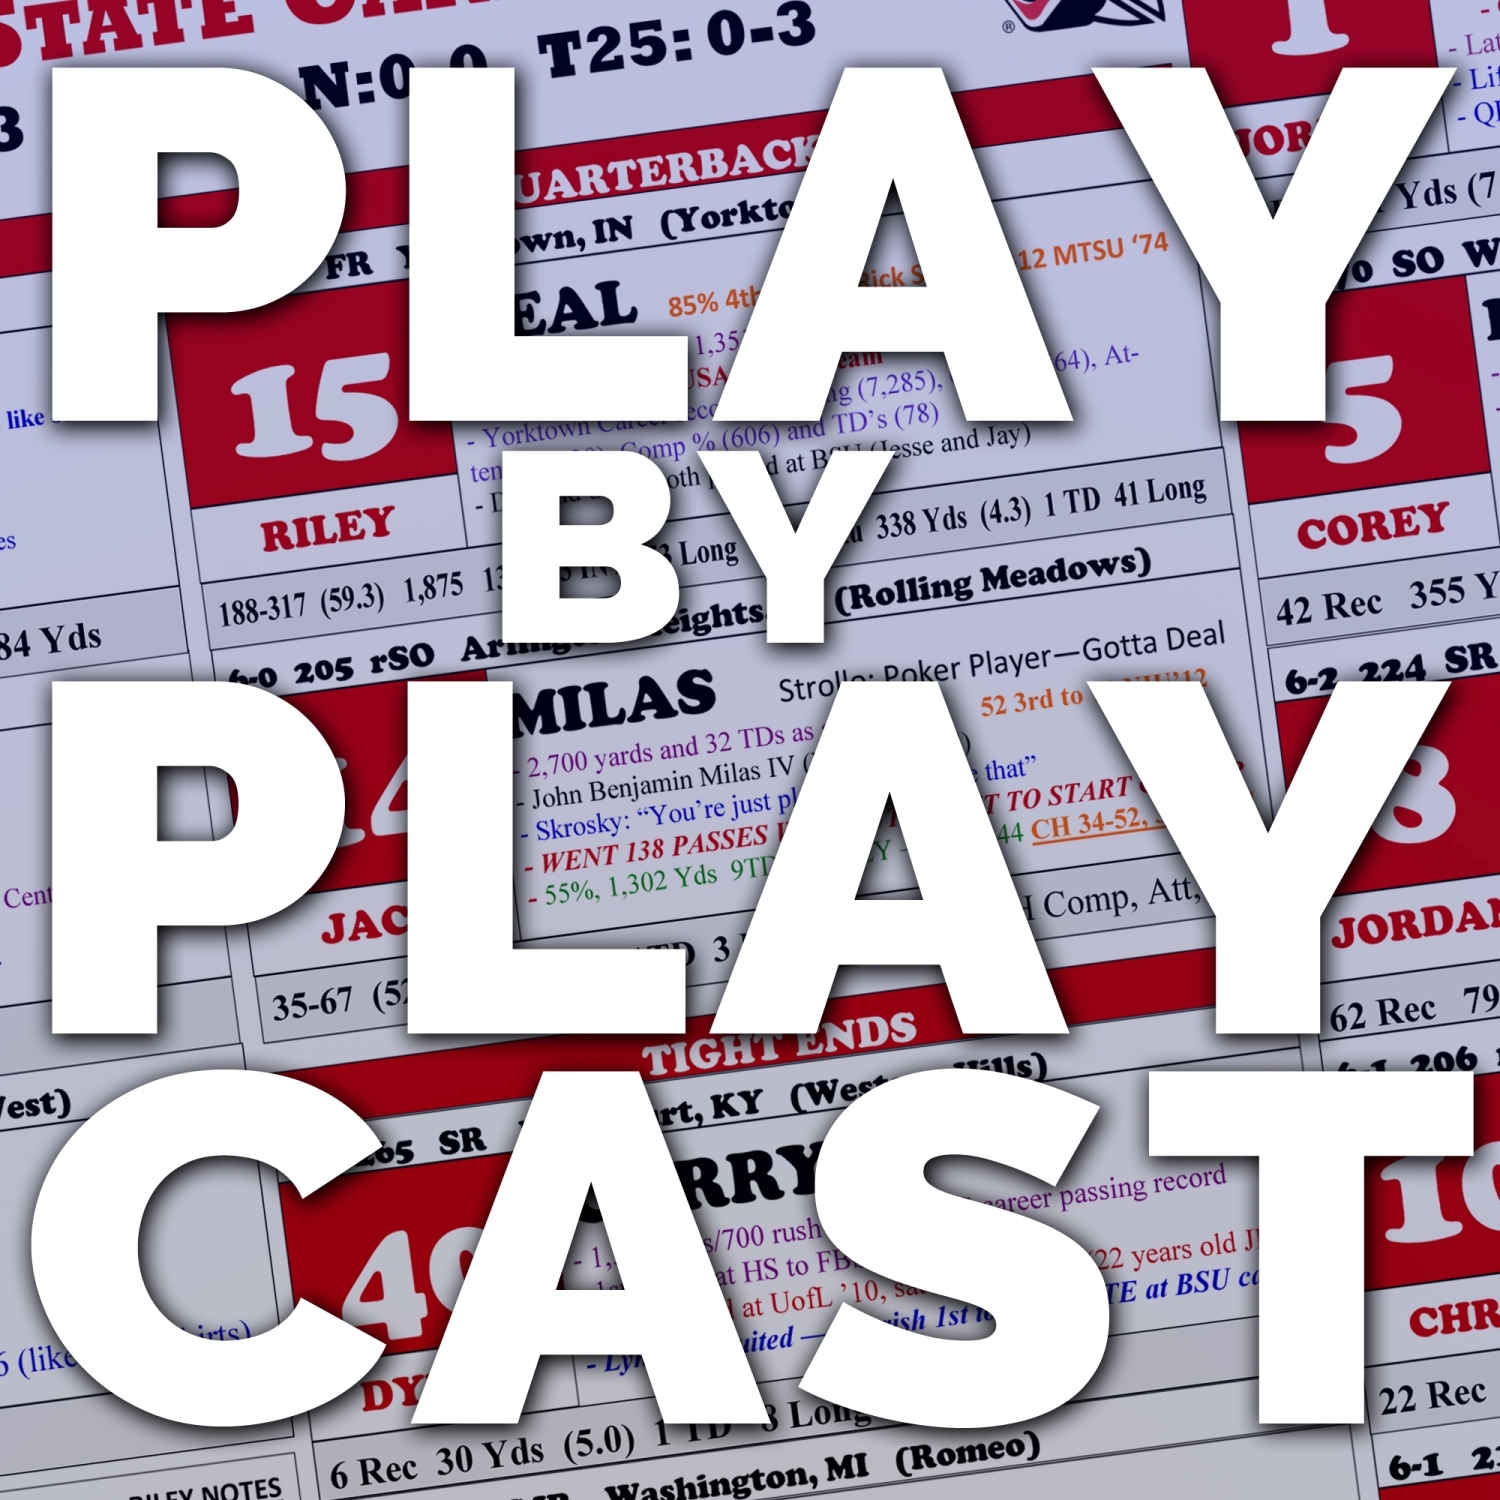 Play-by-Playcast Ep. 8 (Bob Socci / New England Patriots)